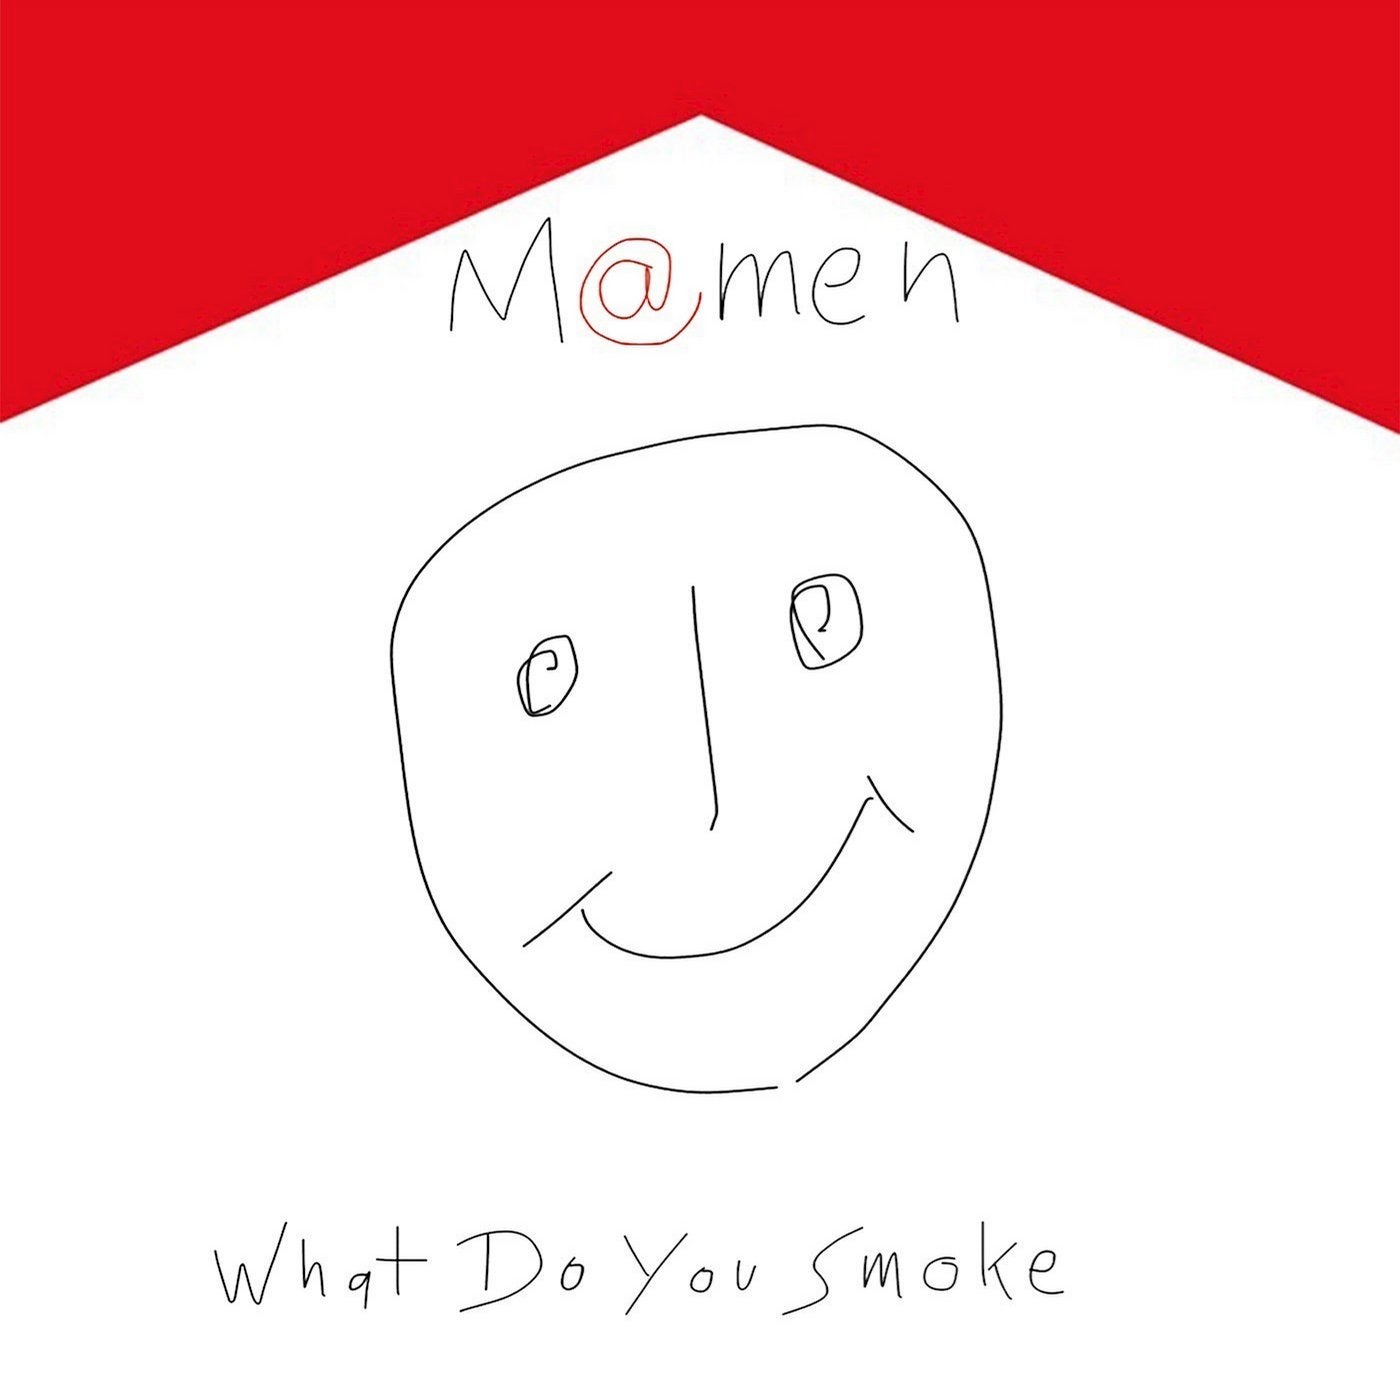 What do you smoke ?